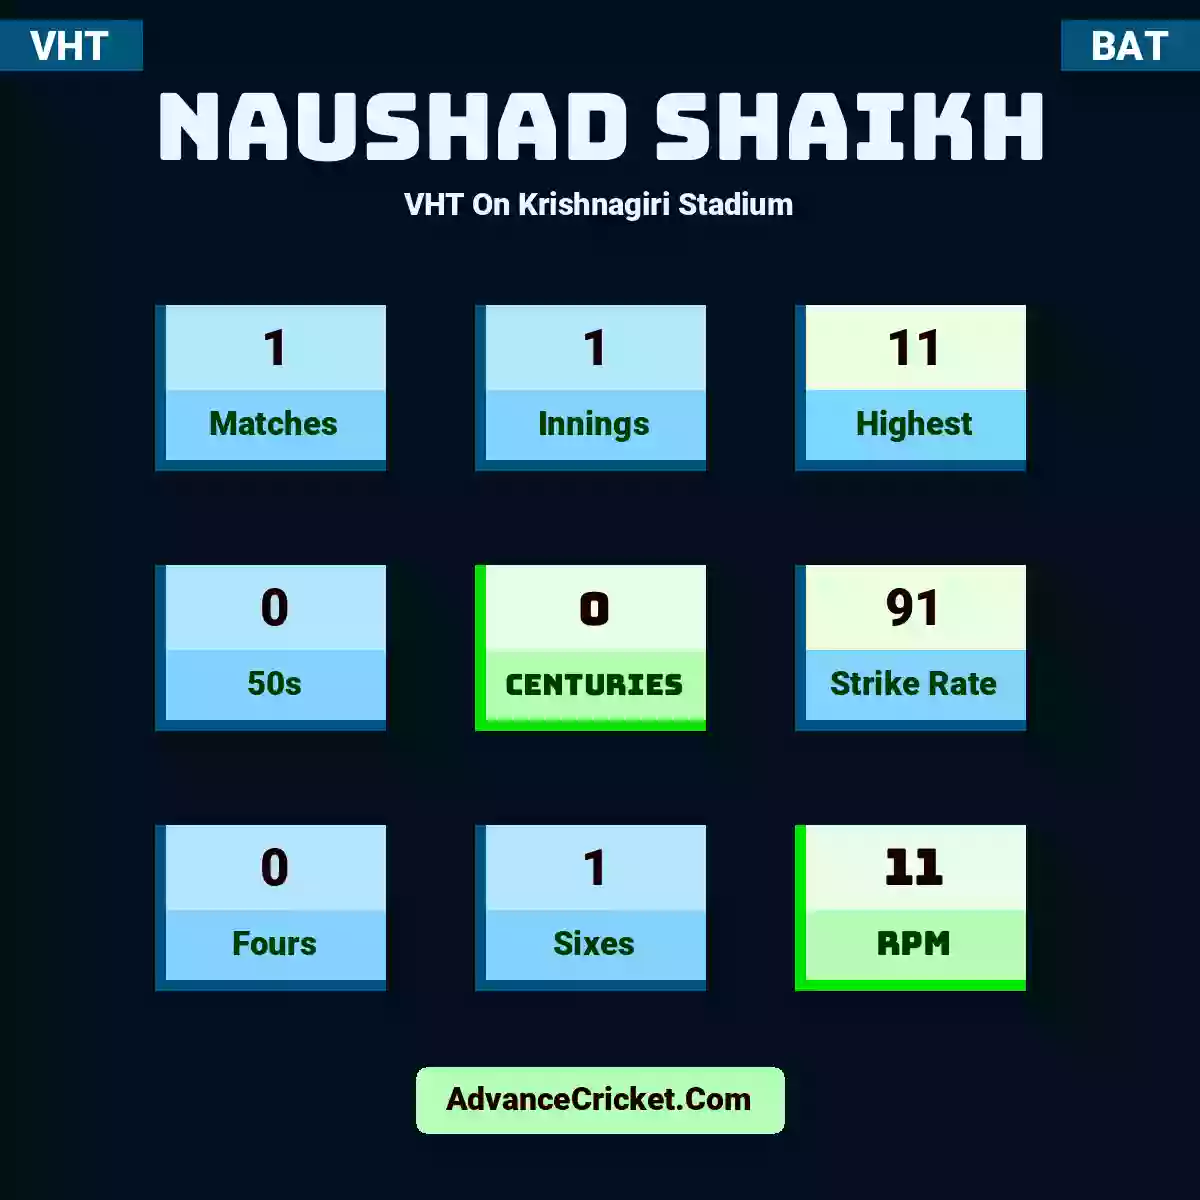 Naushad Shaikh VHT  On Krishnagiri Stadium, Naushad Shaikh played 1 matches, scored 11 runs as highest, 0 half-centuries, and 0 centuries, with a strike rate of 91. N.Shaikh hit 0 fours and 1 sixes, with an RPM of 11.